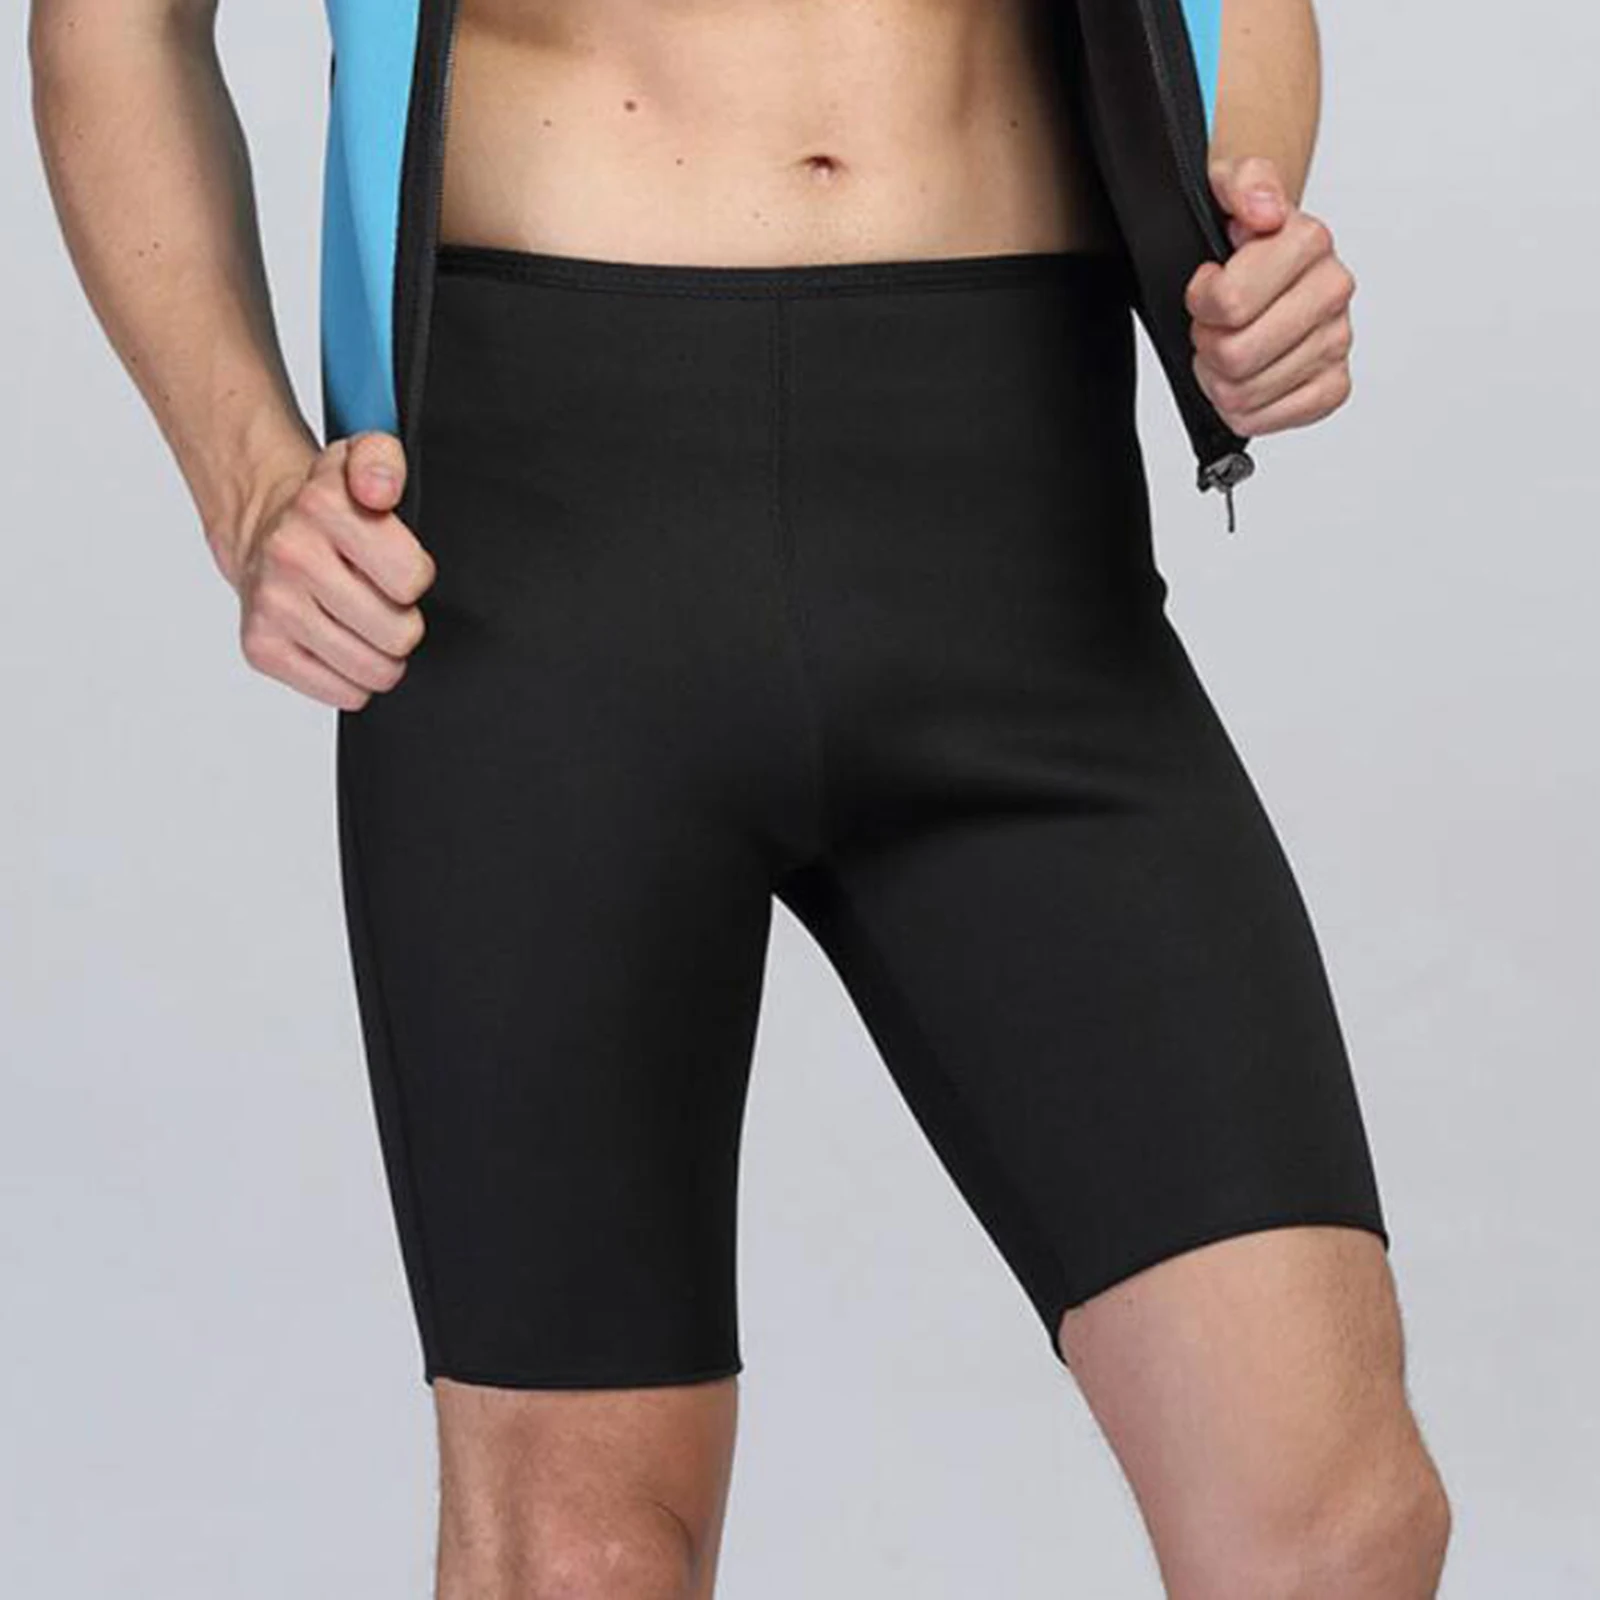 3mm Neoprene Warm Wetsuit Shorts Pants for Sail Canoe Kayak Surf Swim Cycling 